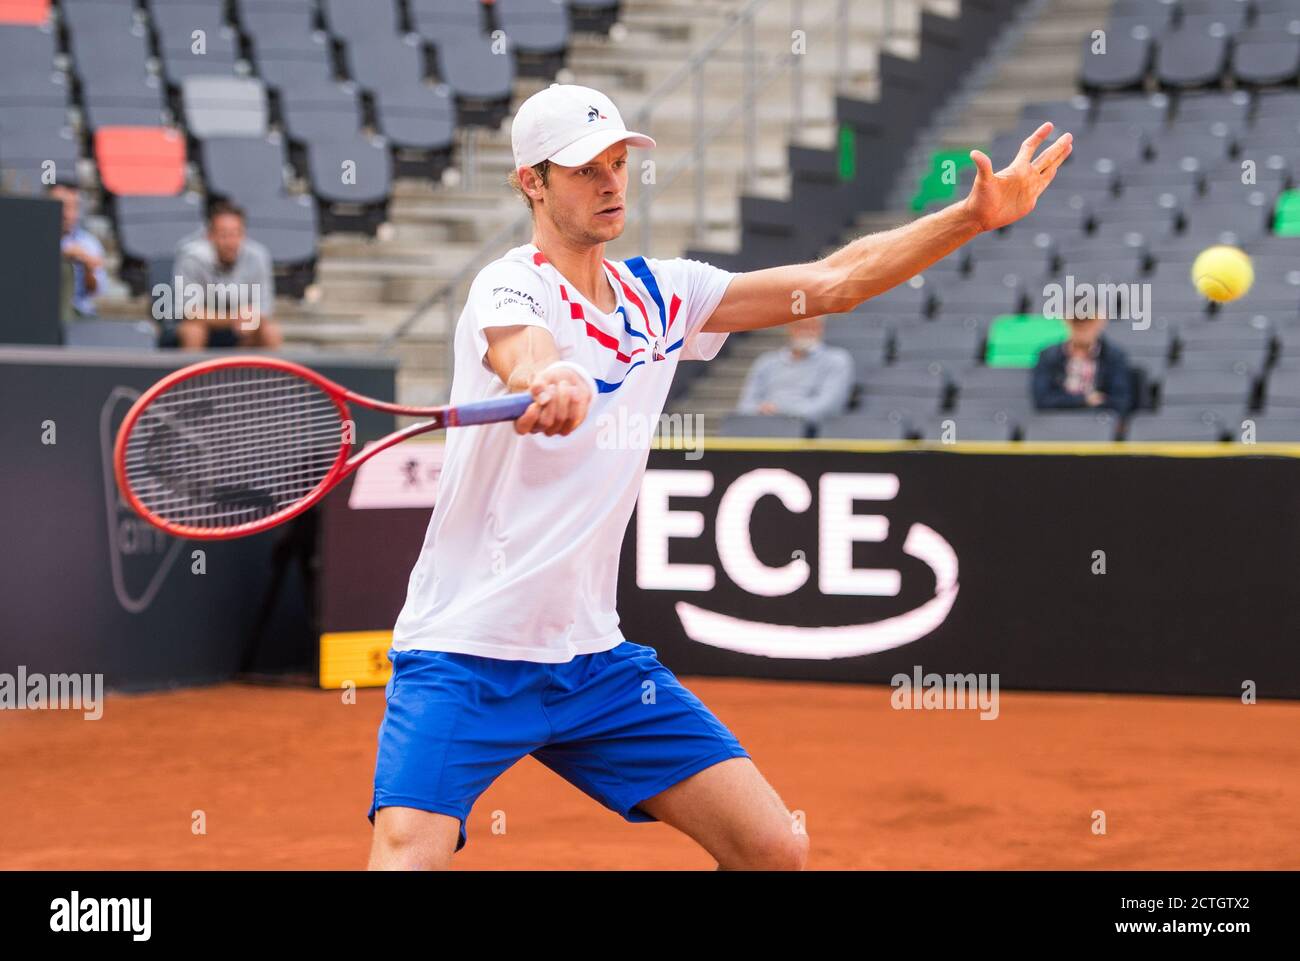 Hamburg, Germany. 23rd 2020. Tennis ATP Tour - Hamburg European Open, singles, men, round of sixteen in the stadium at Rothenbaum. Garin (Chile) - hemp man (Germany). Yannick Hanfmann in action.